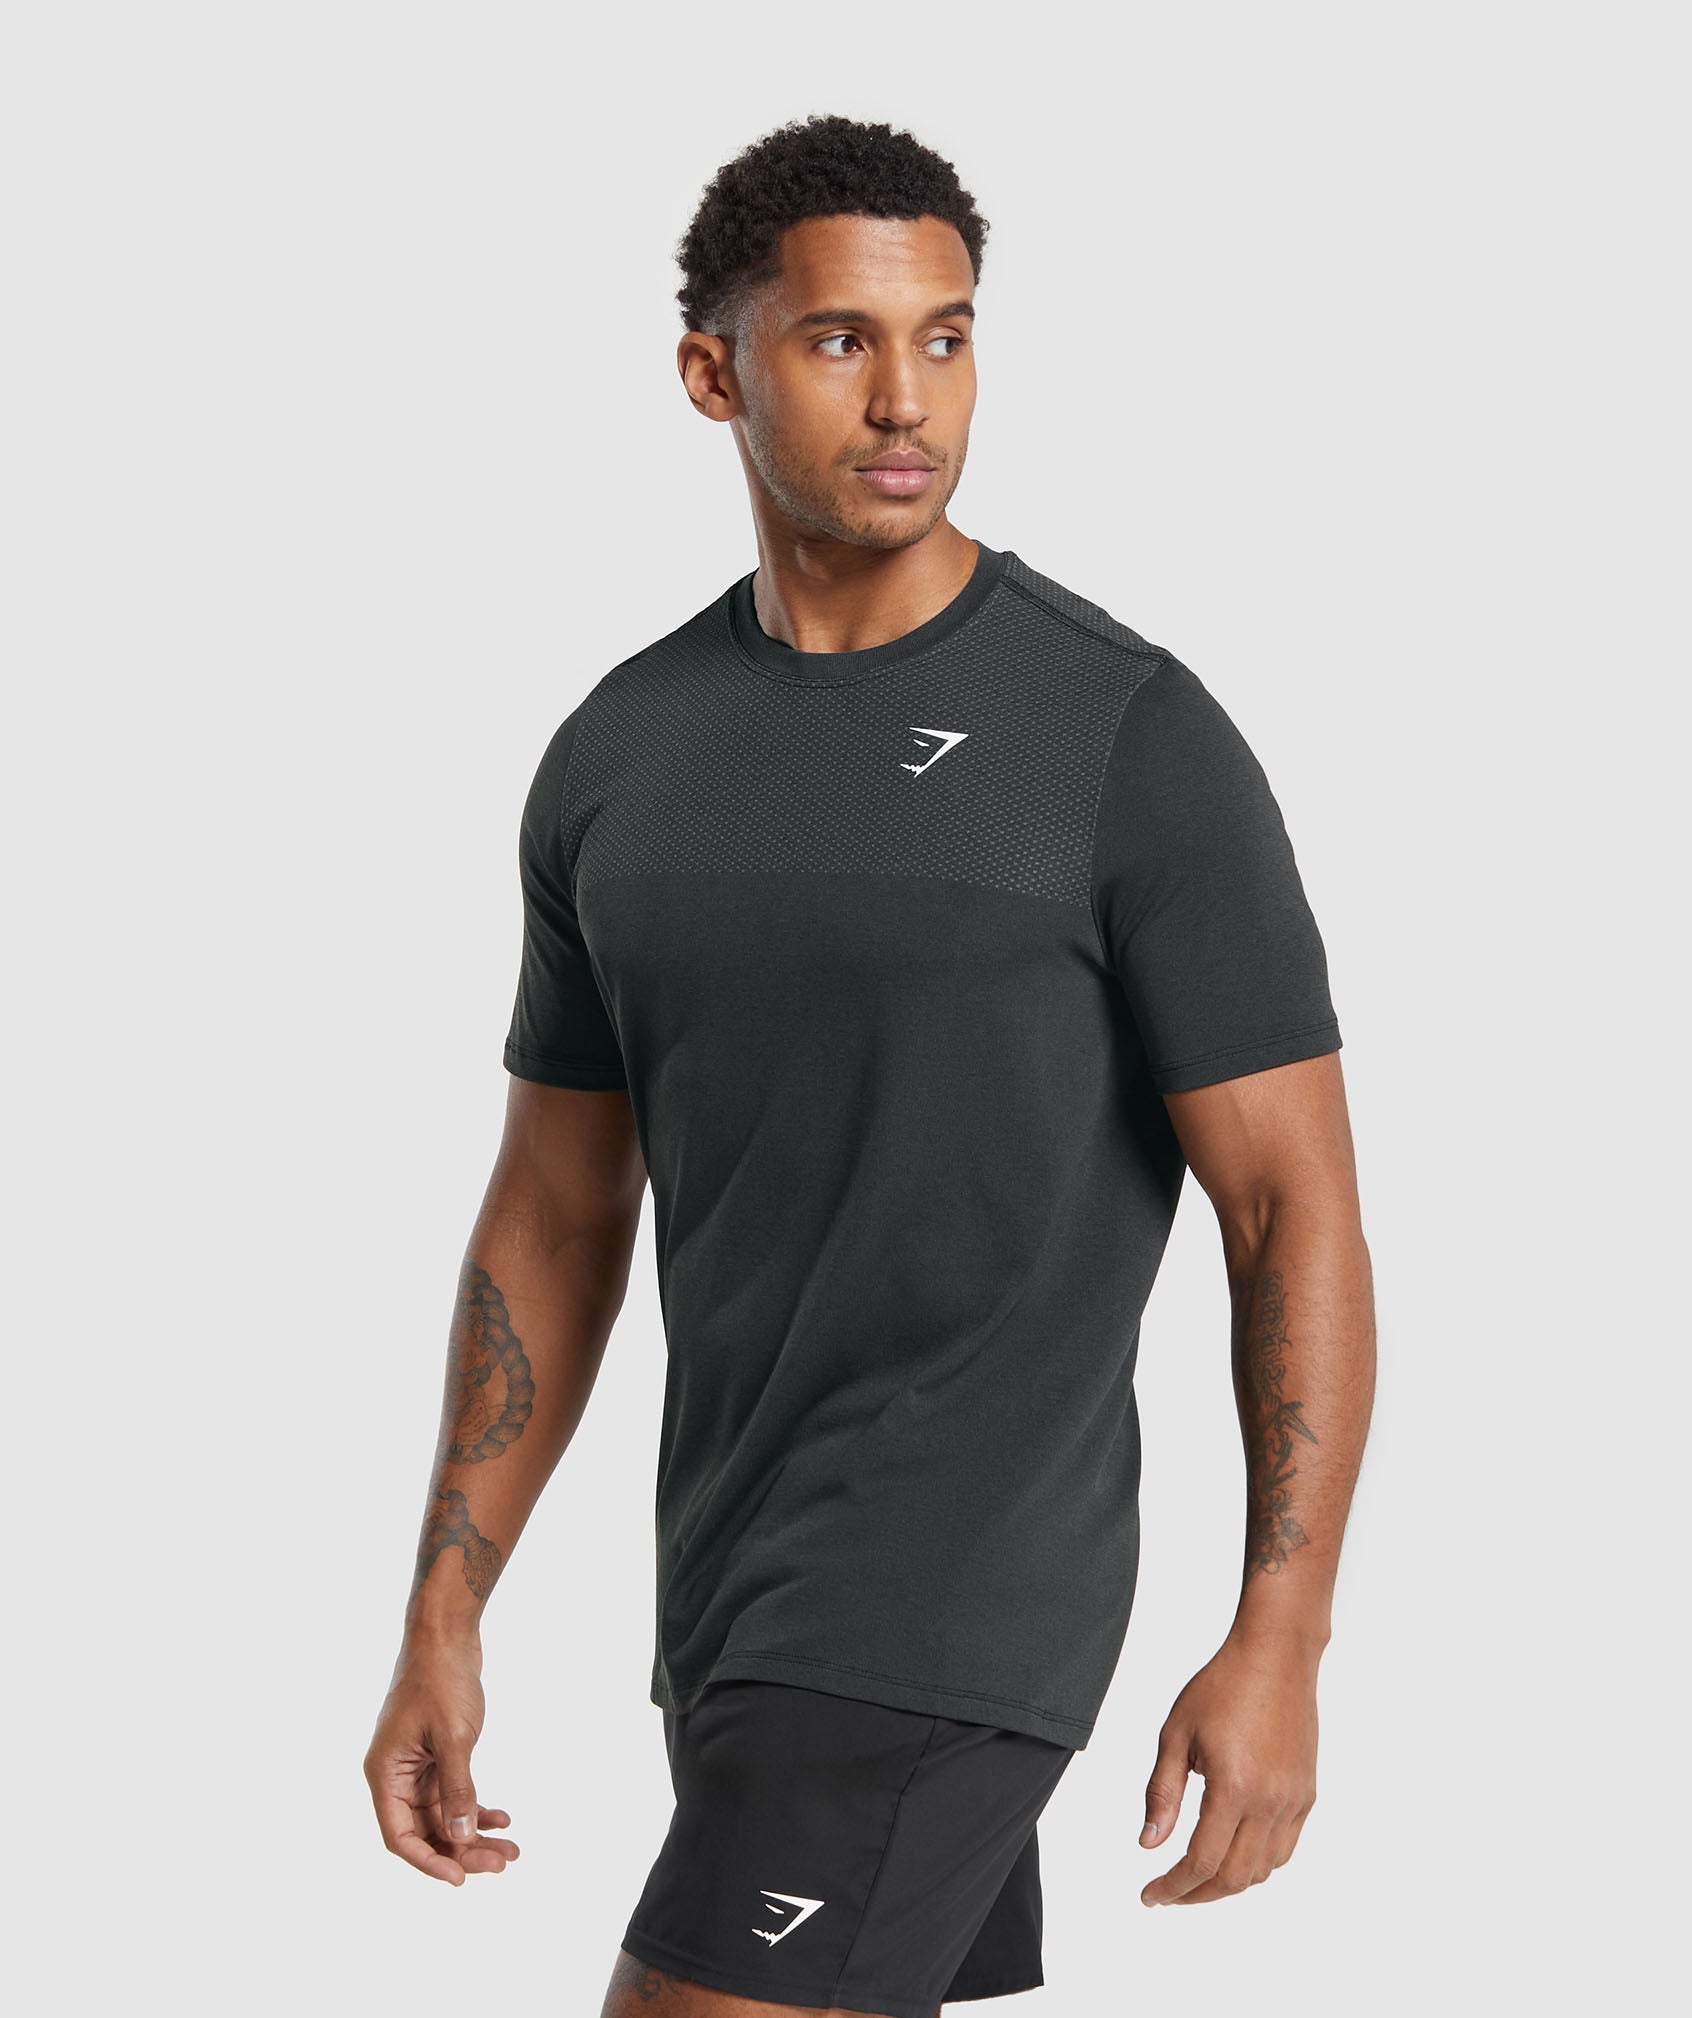 Vital Seamless T-Shirt in Black/Medium Grey Marl - view 3